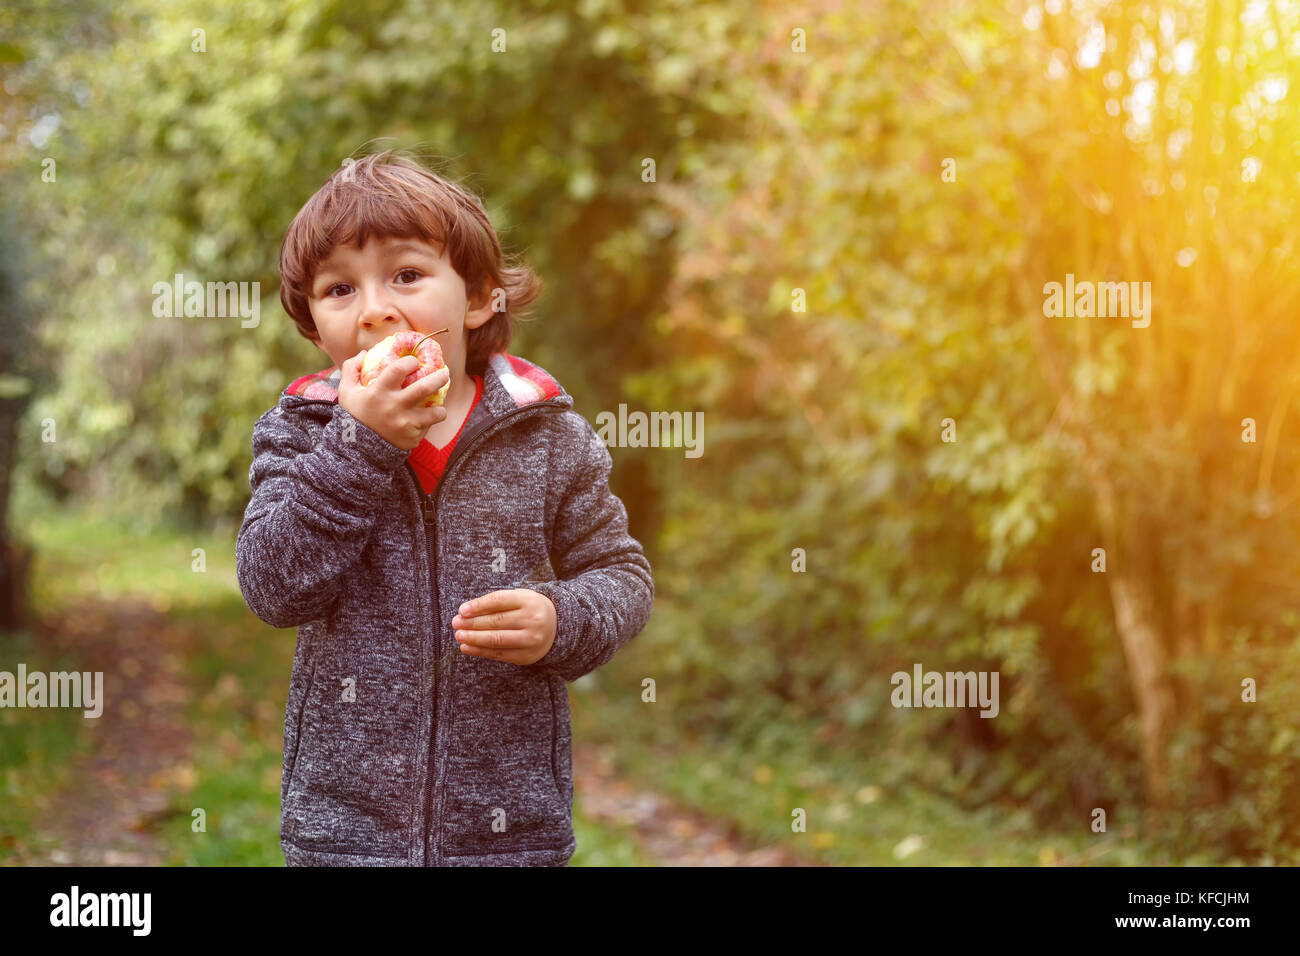 Little boy child kid eating apple fruit outdoor autumn fall copyspace garden nature outdoors Stock Photo